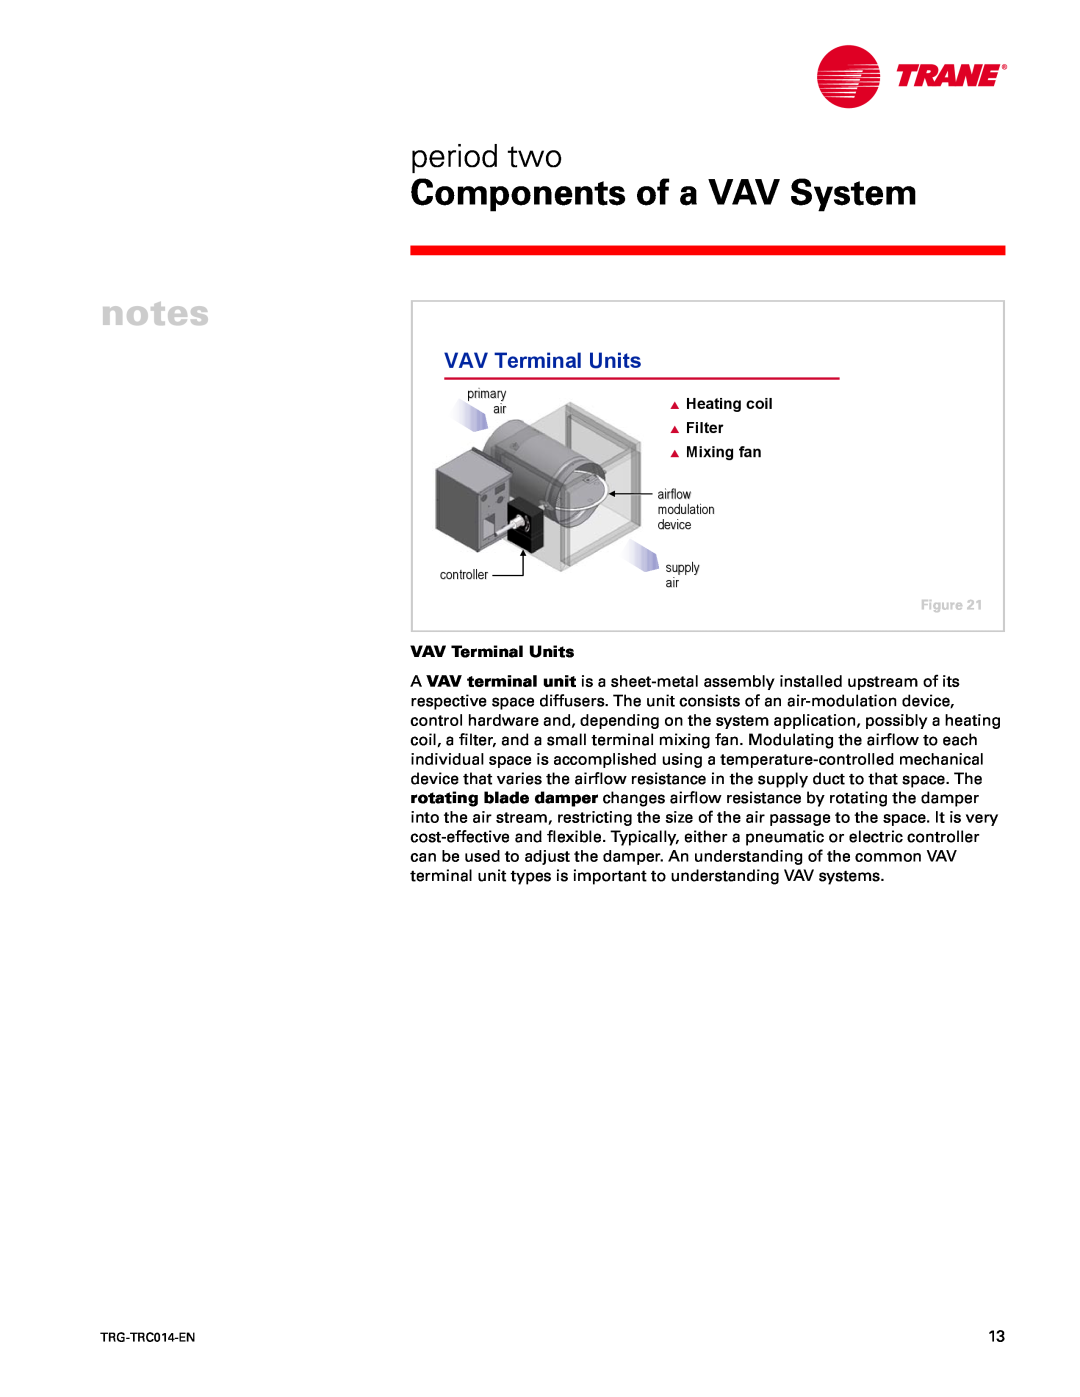 Trane TRG-TRC014-EN manual period two, VAV Terminal Units, Components of a VAV System 